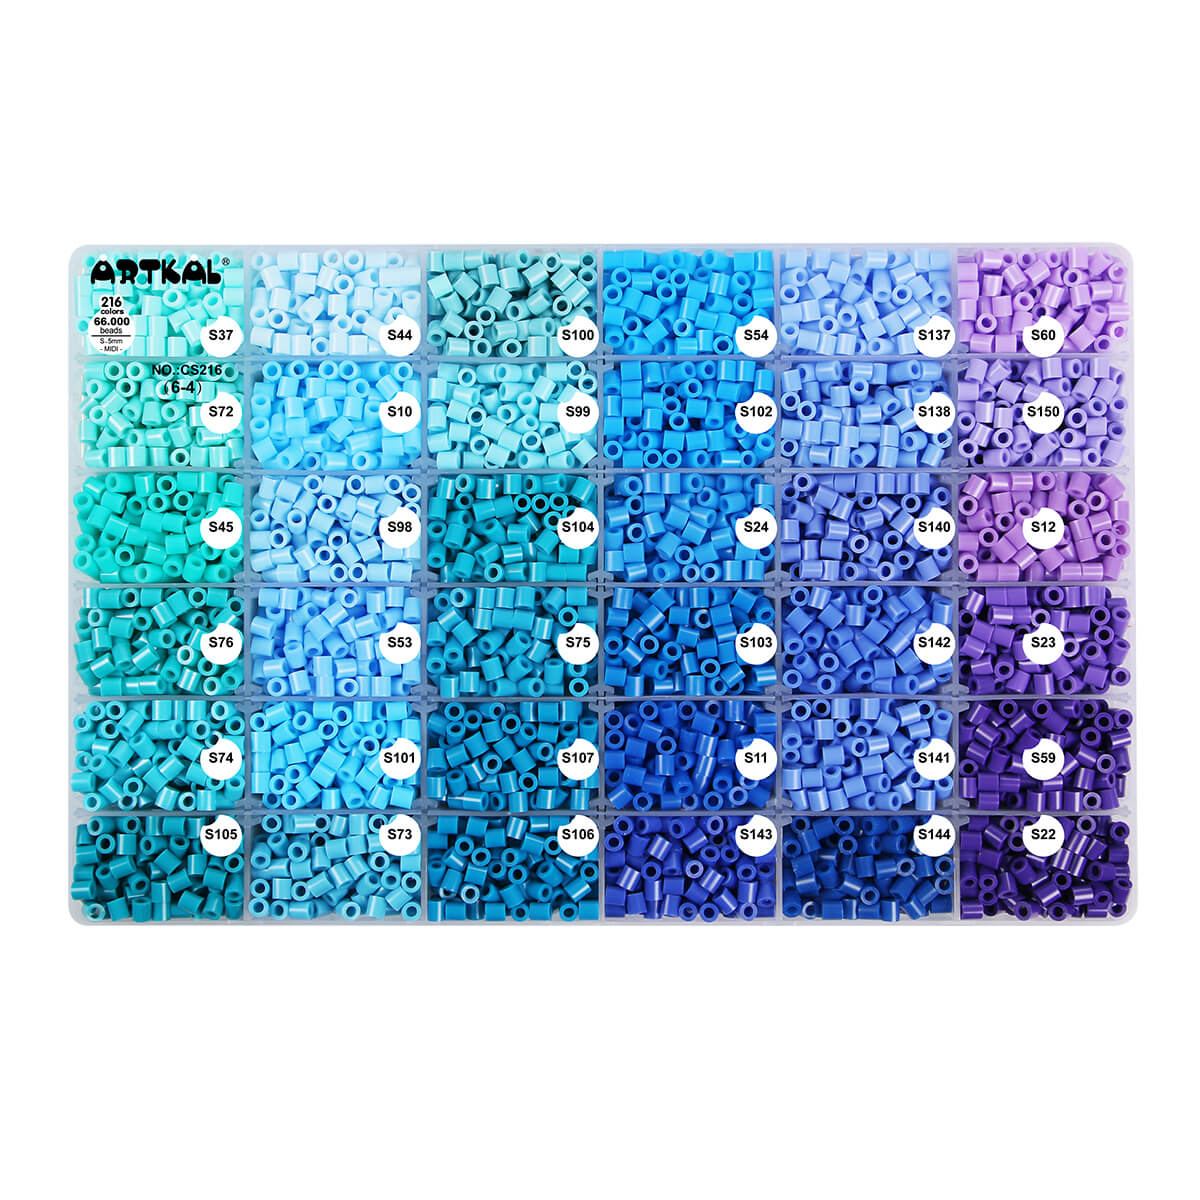 (216) Full Colors Box Set S-5mm Midi Artkal beads CS216